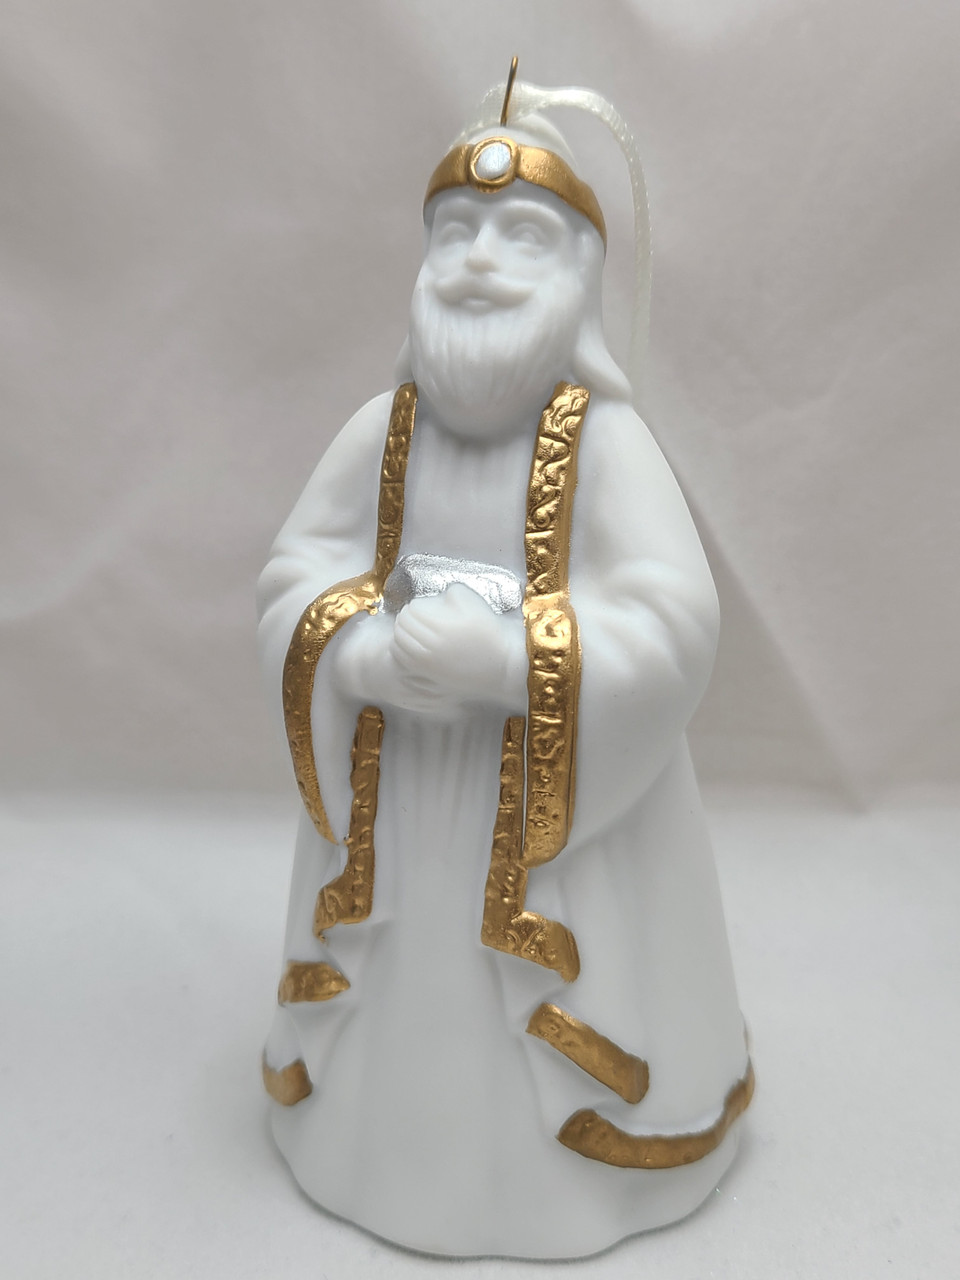 3 Wise Men - Hallmark Keepsake Ornaments - Magi Bells Collection